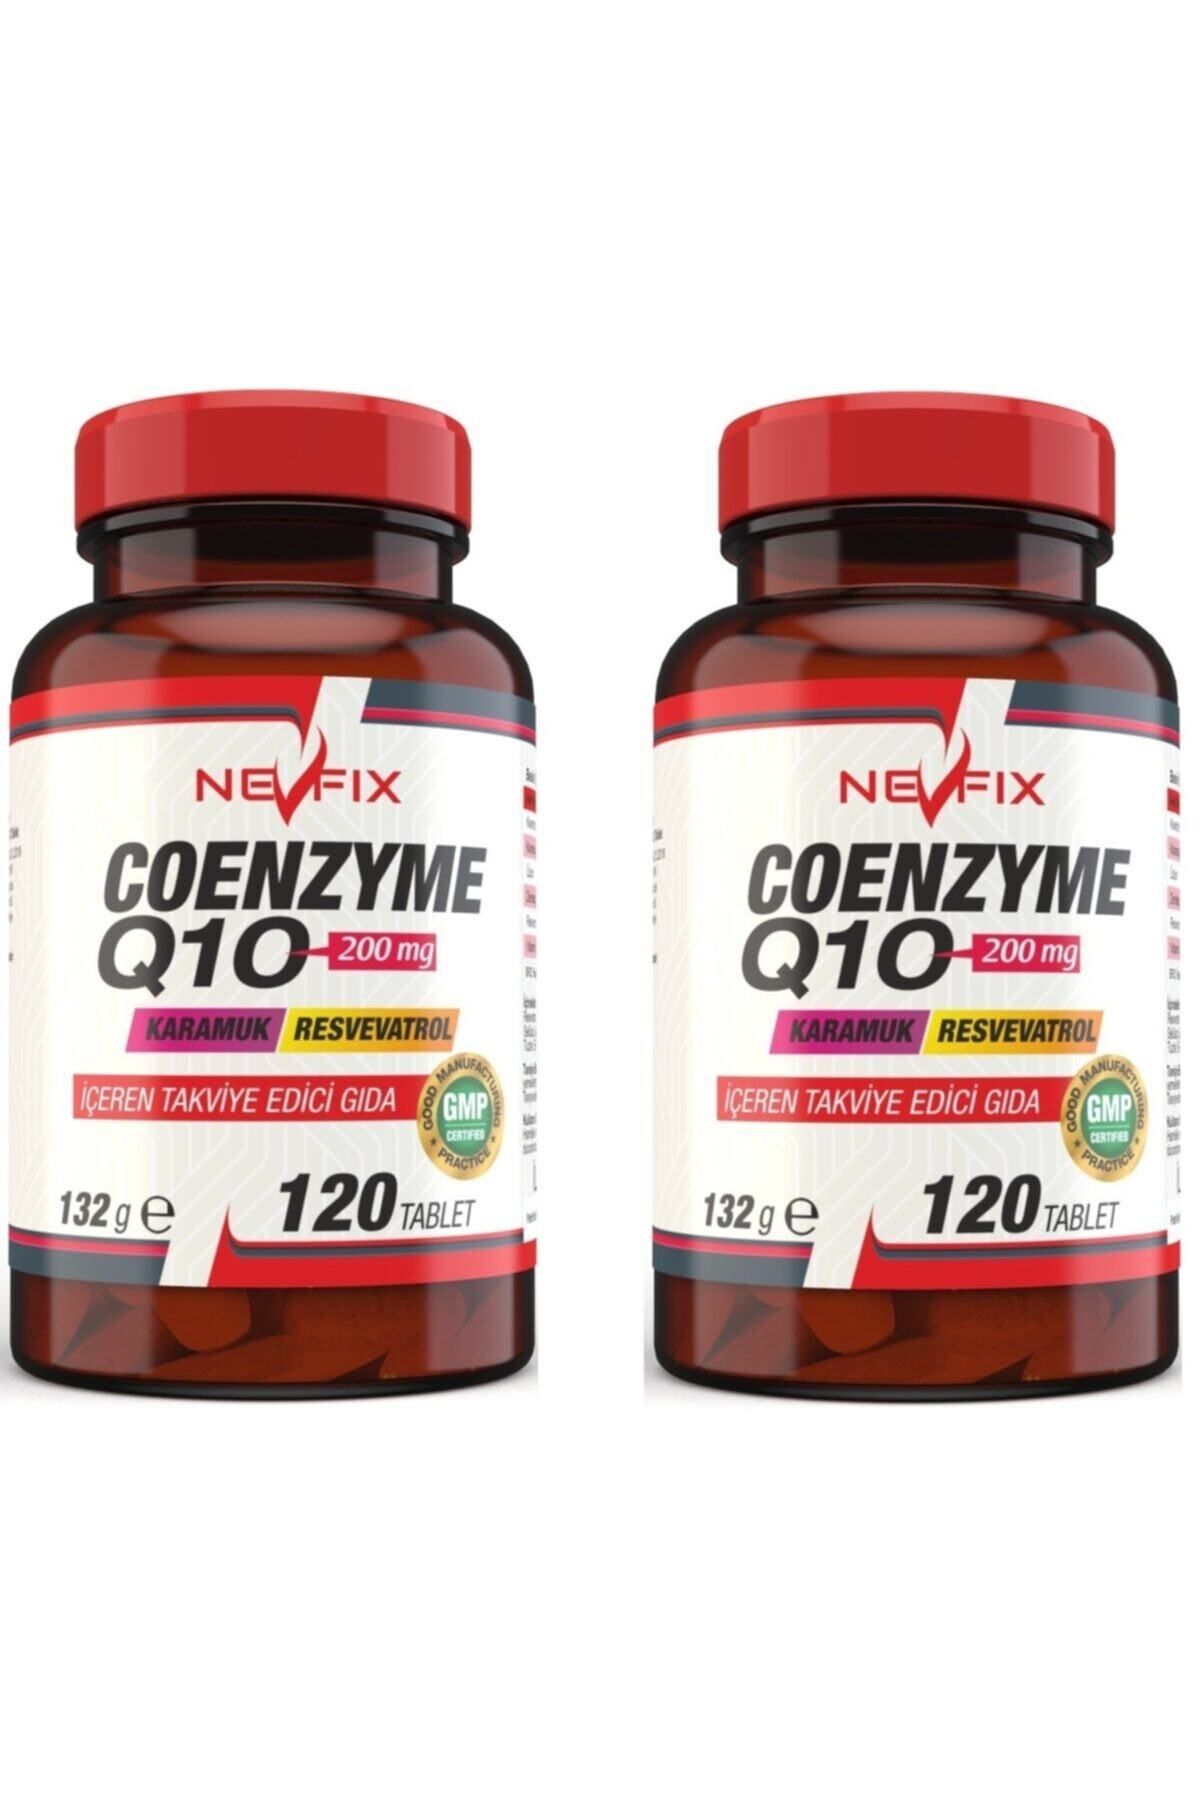 Nevfix Koenzim Coenzyme Q10 200 Mg 120 Tablet X 2 Kutu